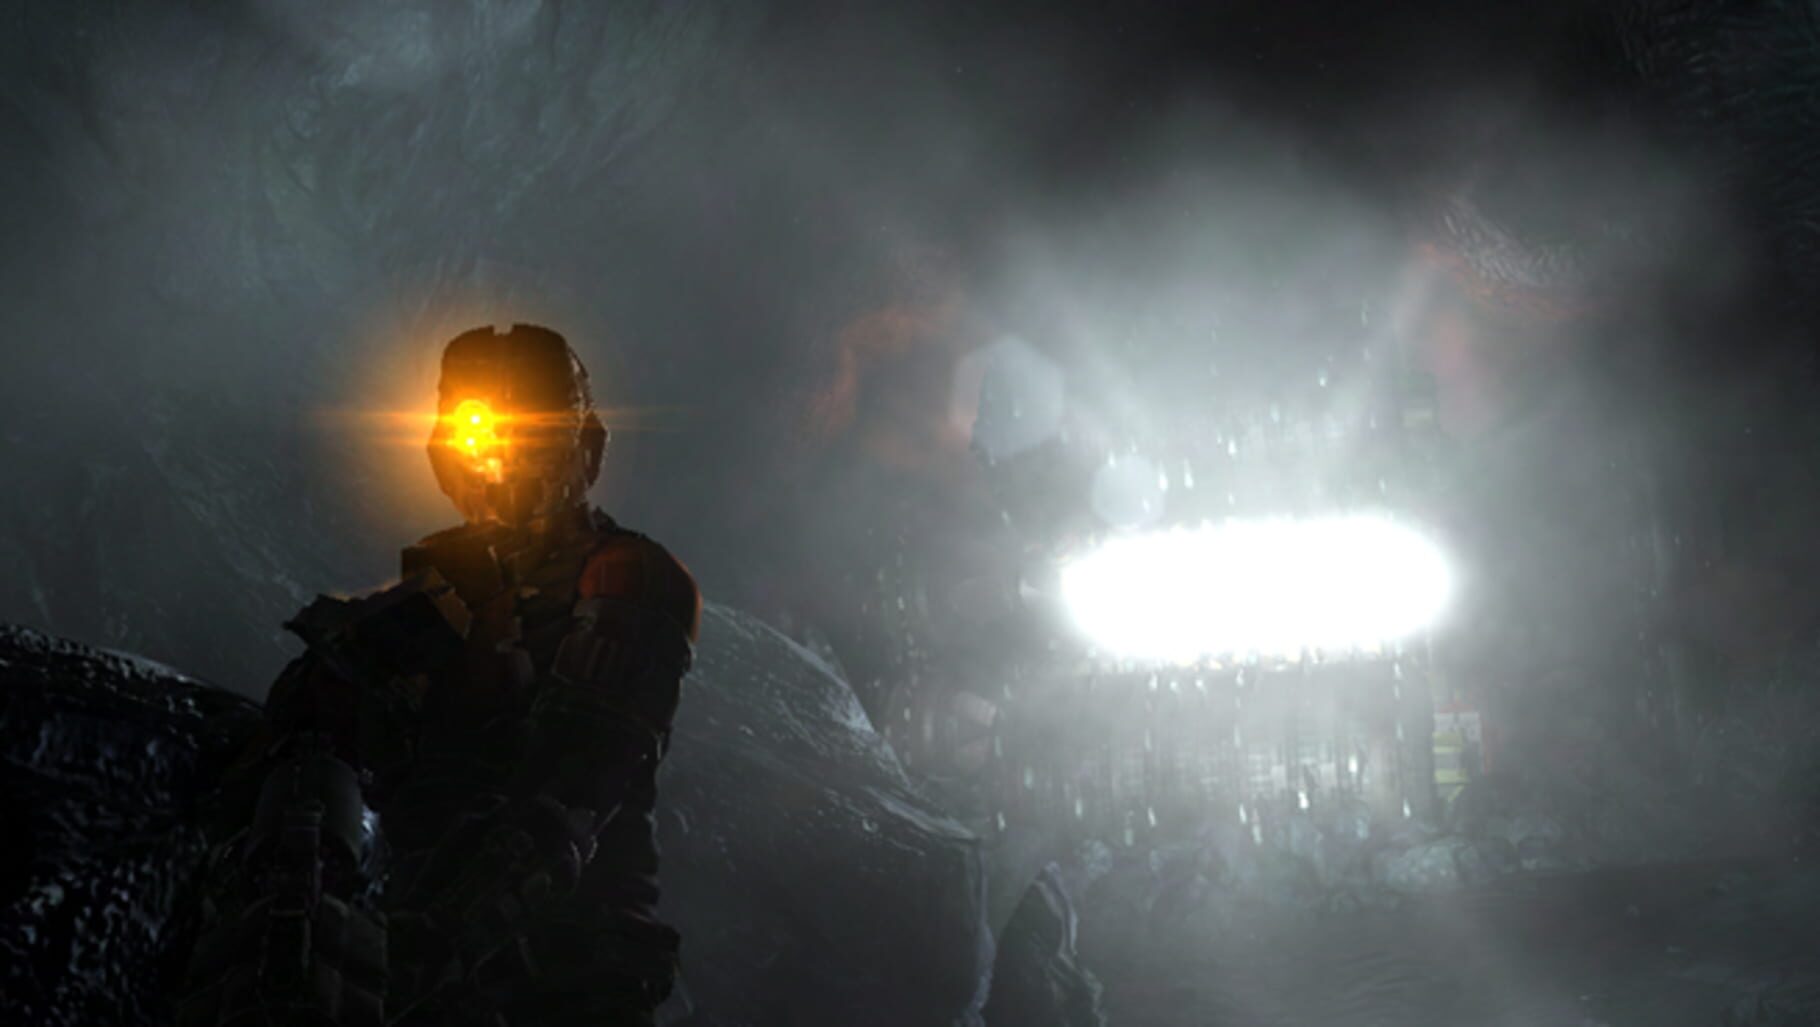 Dead Space 2 screenshots